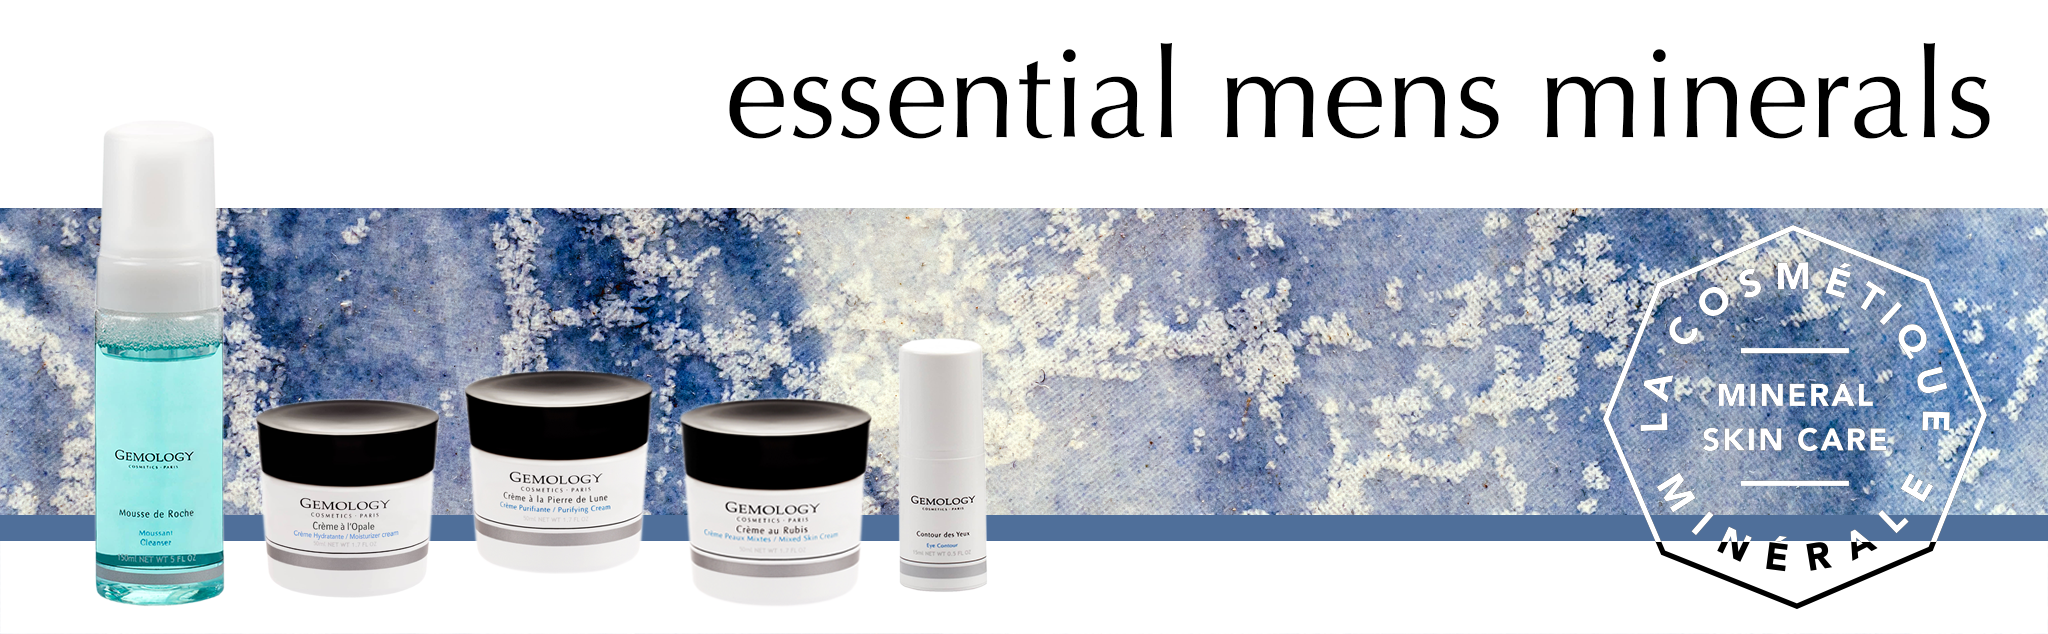 Gemology-cosmetics-paris-essential.men-mineral-skincare-products-range-australia-new-zealand